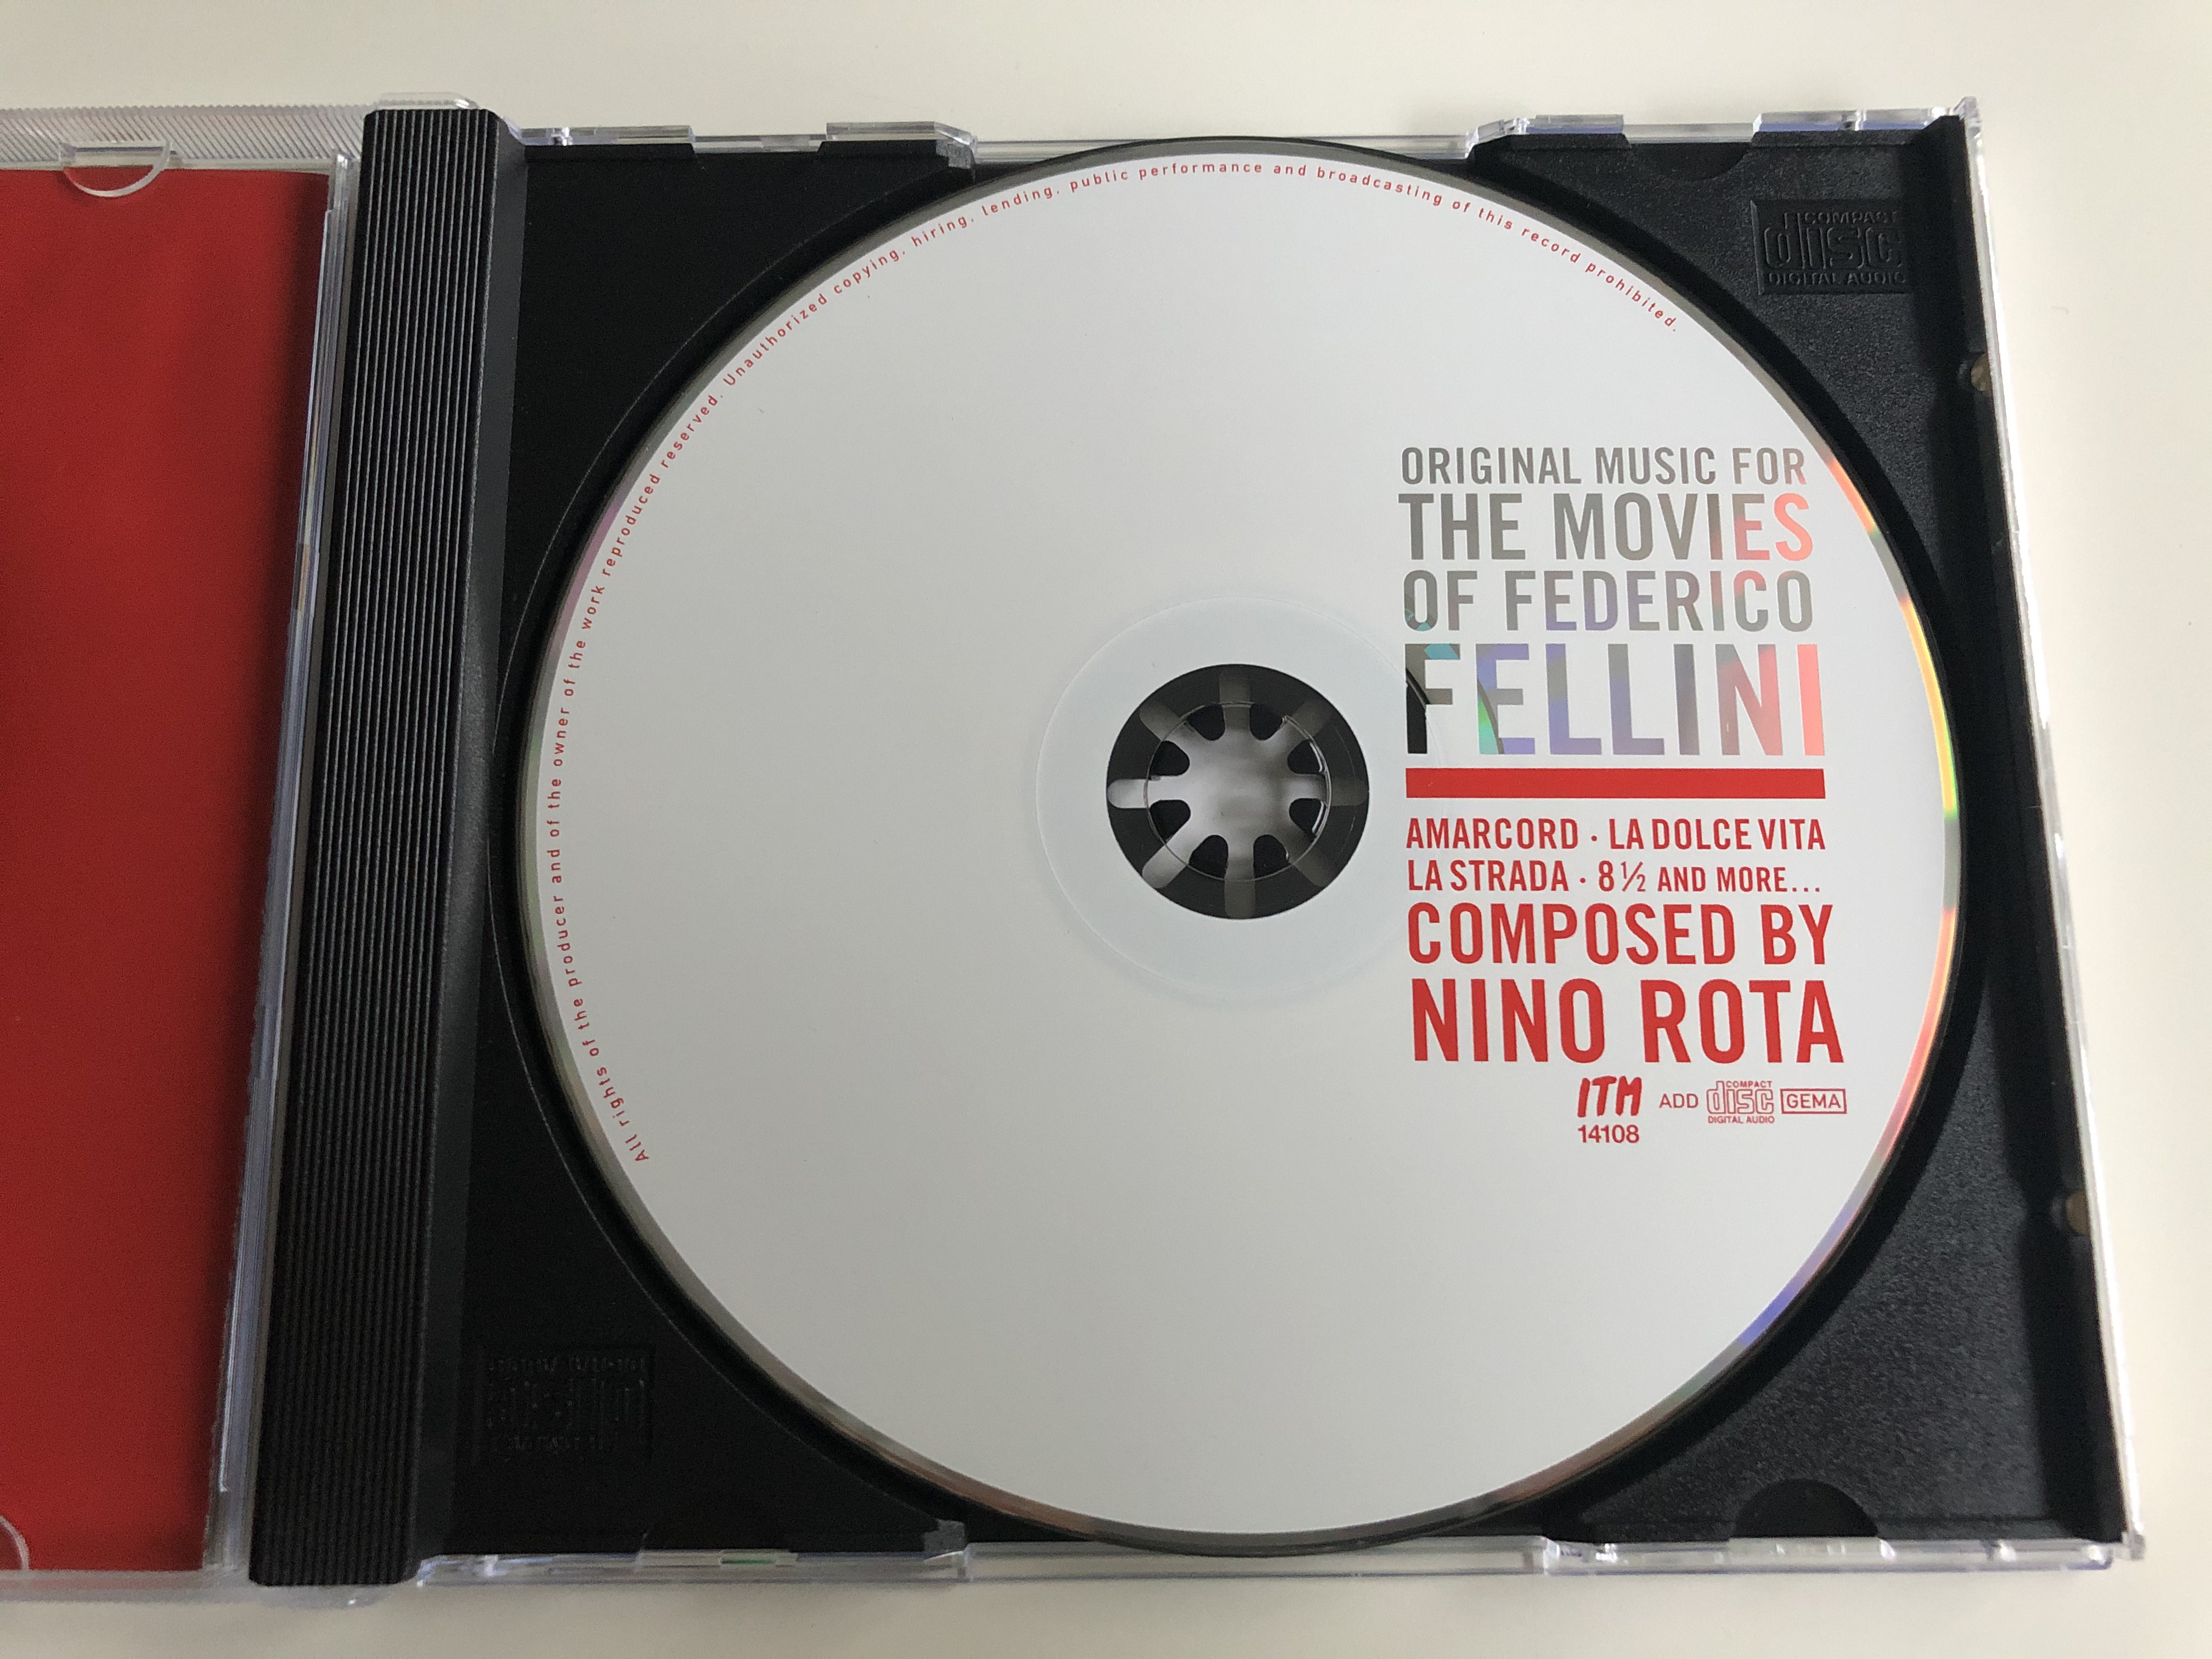 original-music-for-the-movies-of-federico-fellini-amarcord-la-dolce-vita-la-strada-8-12-and-many-more...-composed-by-nino-rota-itm-records-audio-cd-itm-14108-4-.jpg